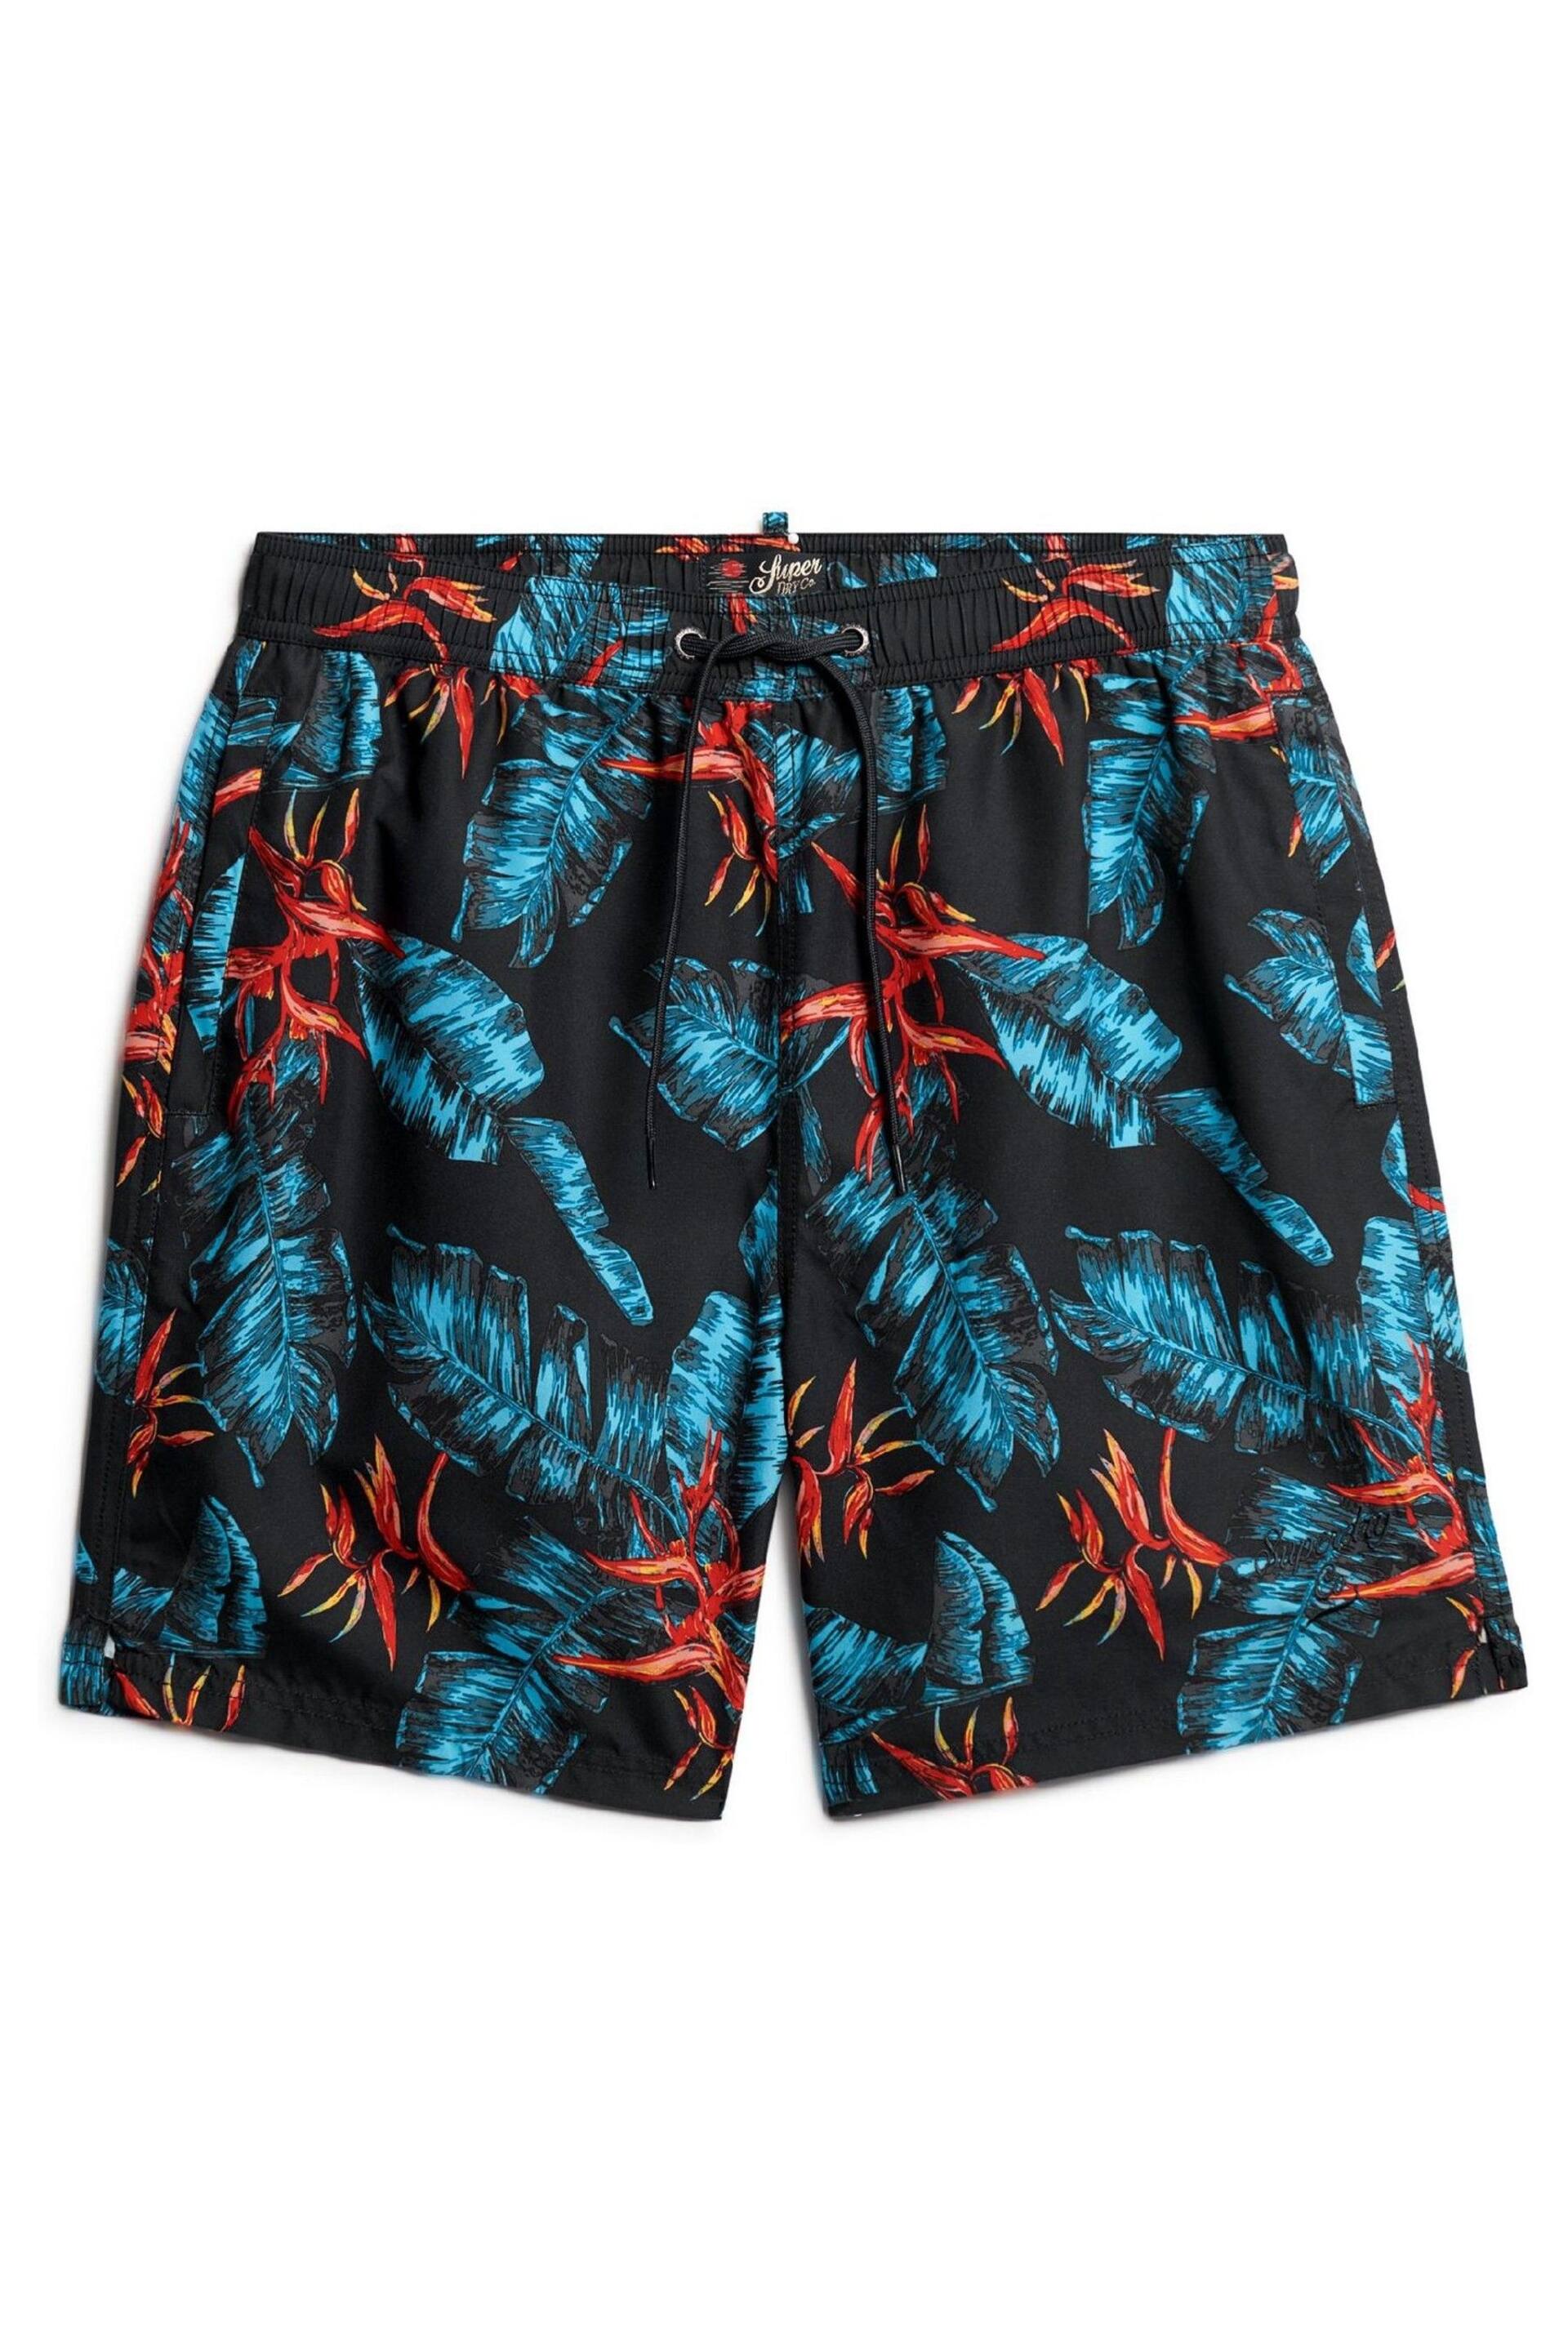 Superdry Blue Hawaiian Print 17” Swim Shorts - Image 4 of 6